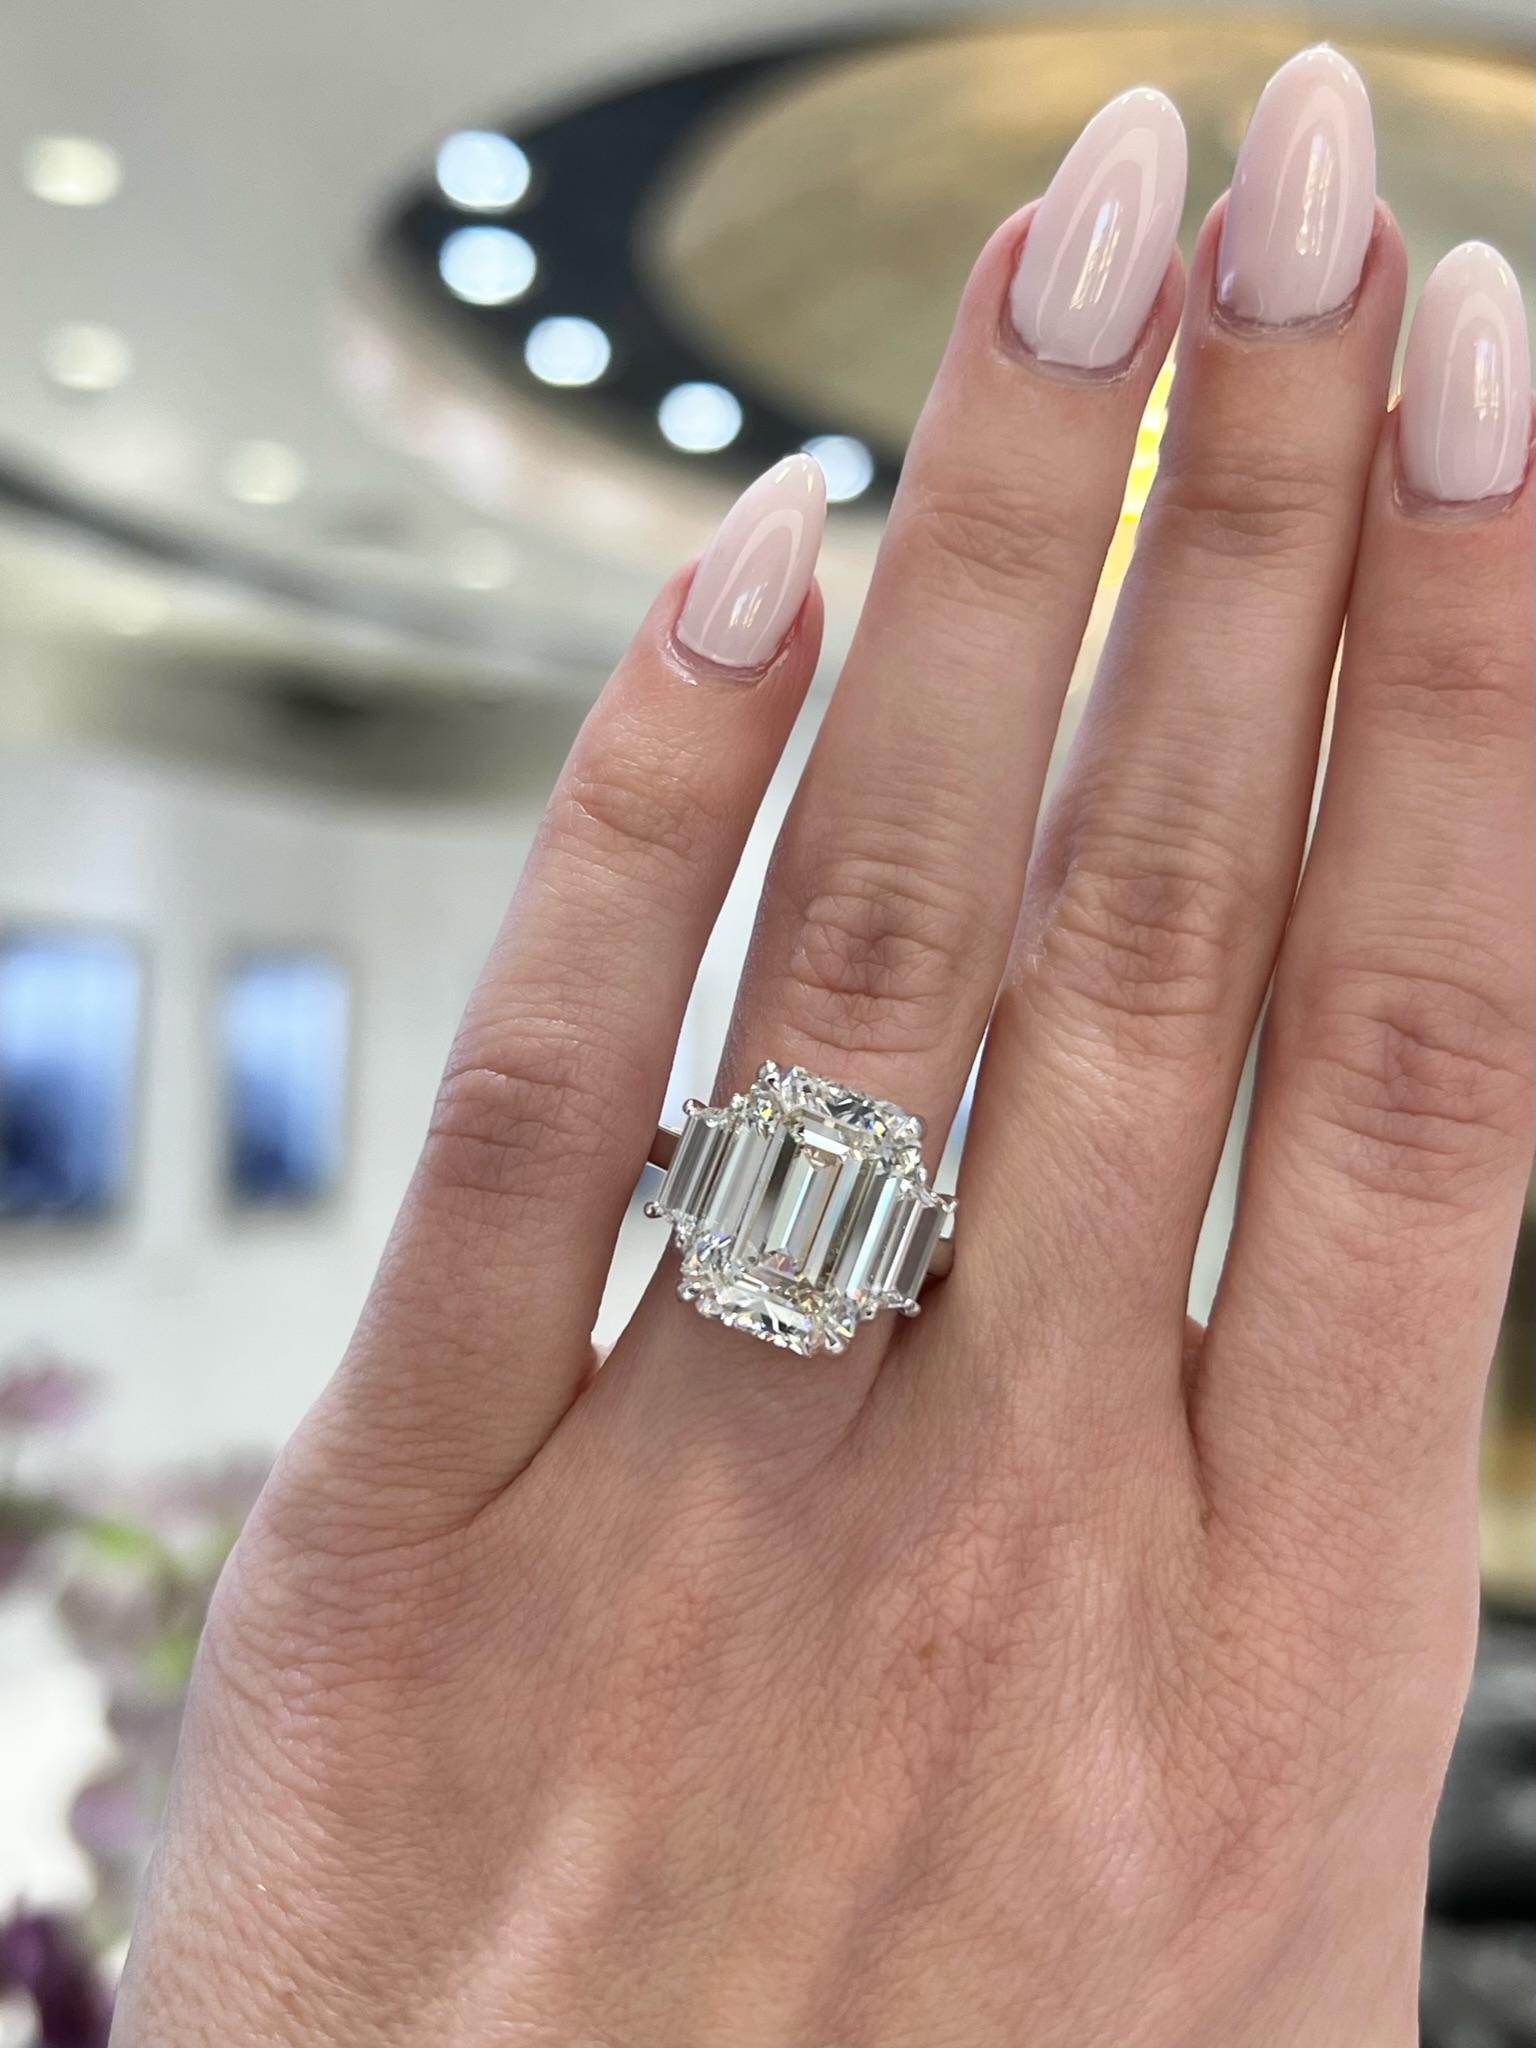 David Rosenberg 8.37 Carat Emerald Cut GIA Three Stone Diamond Engagement Ring For Sale 6